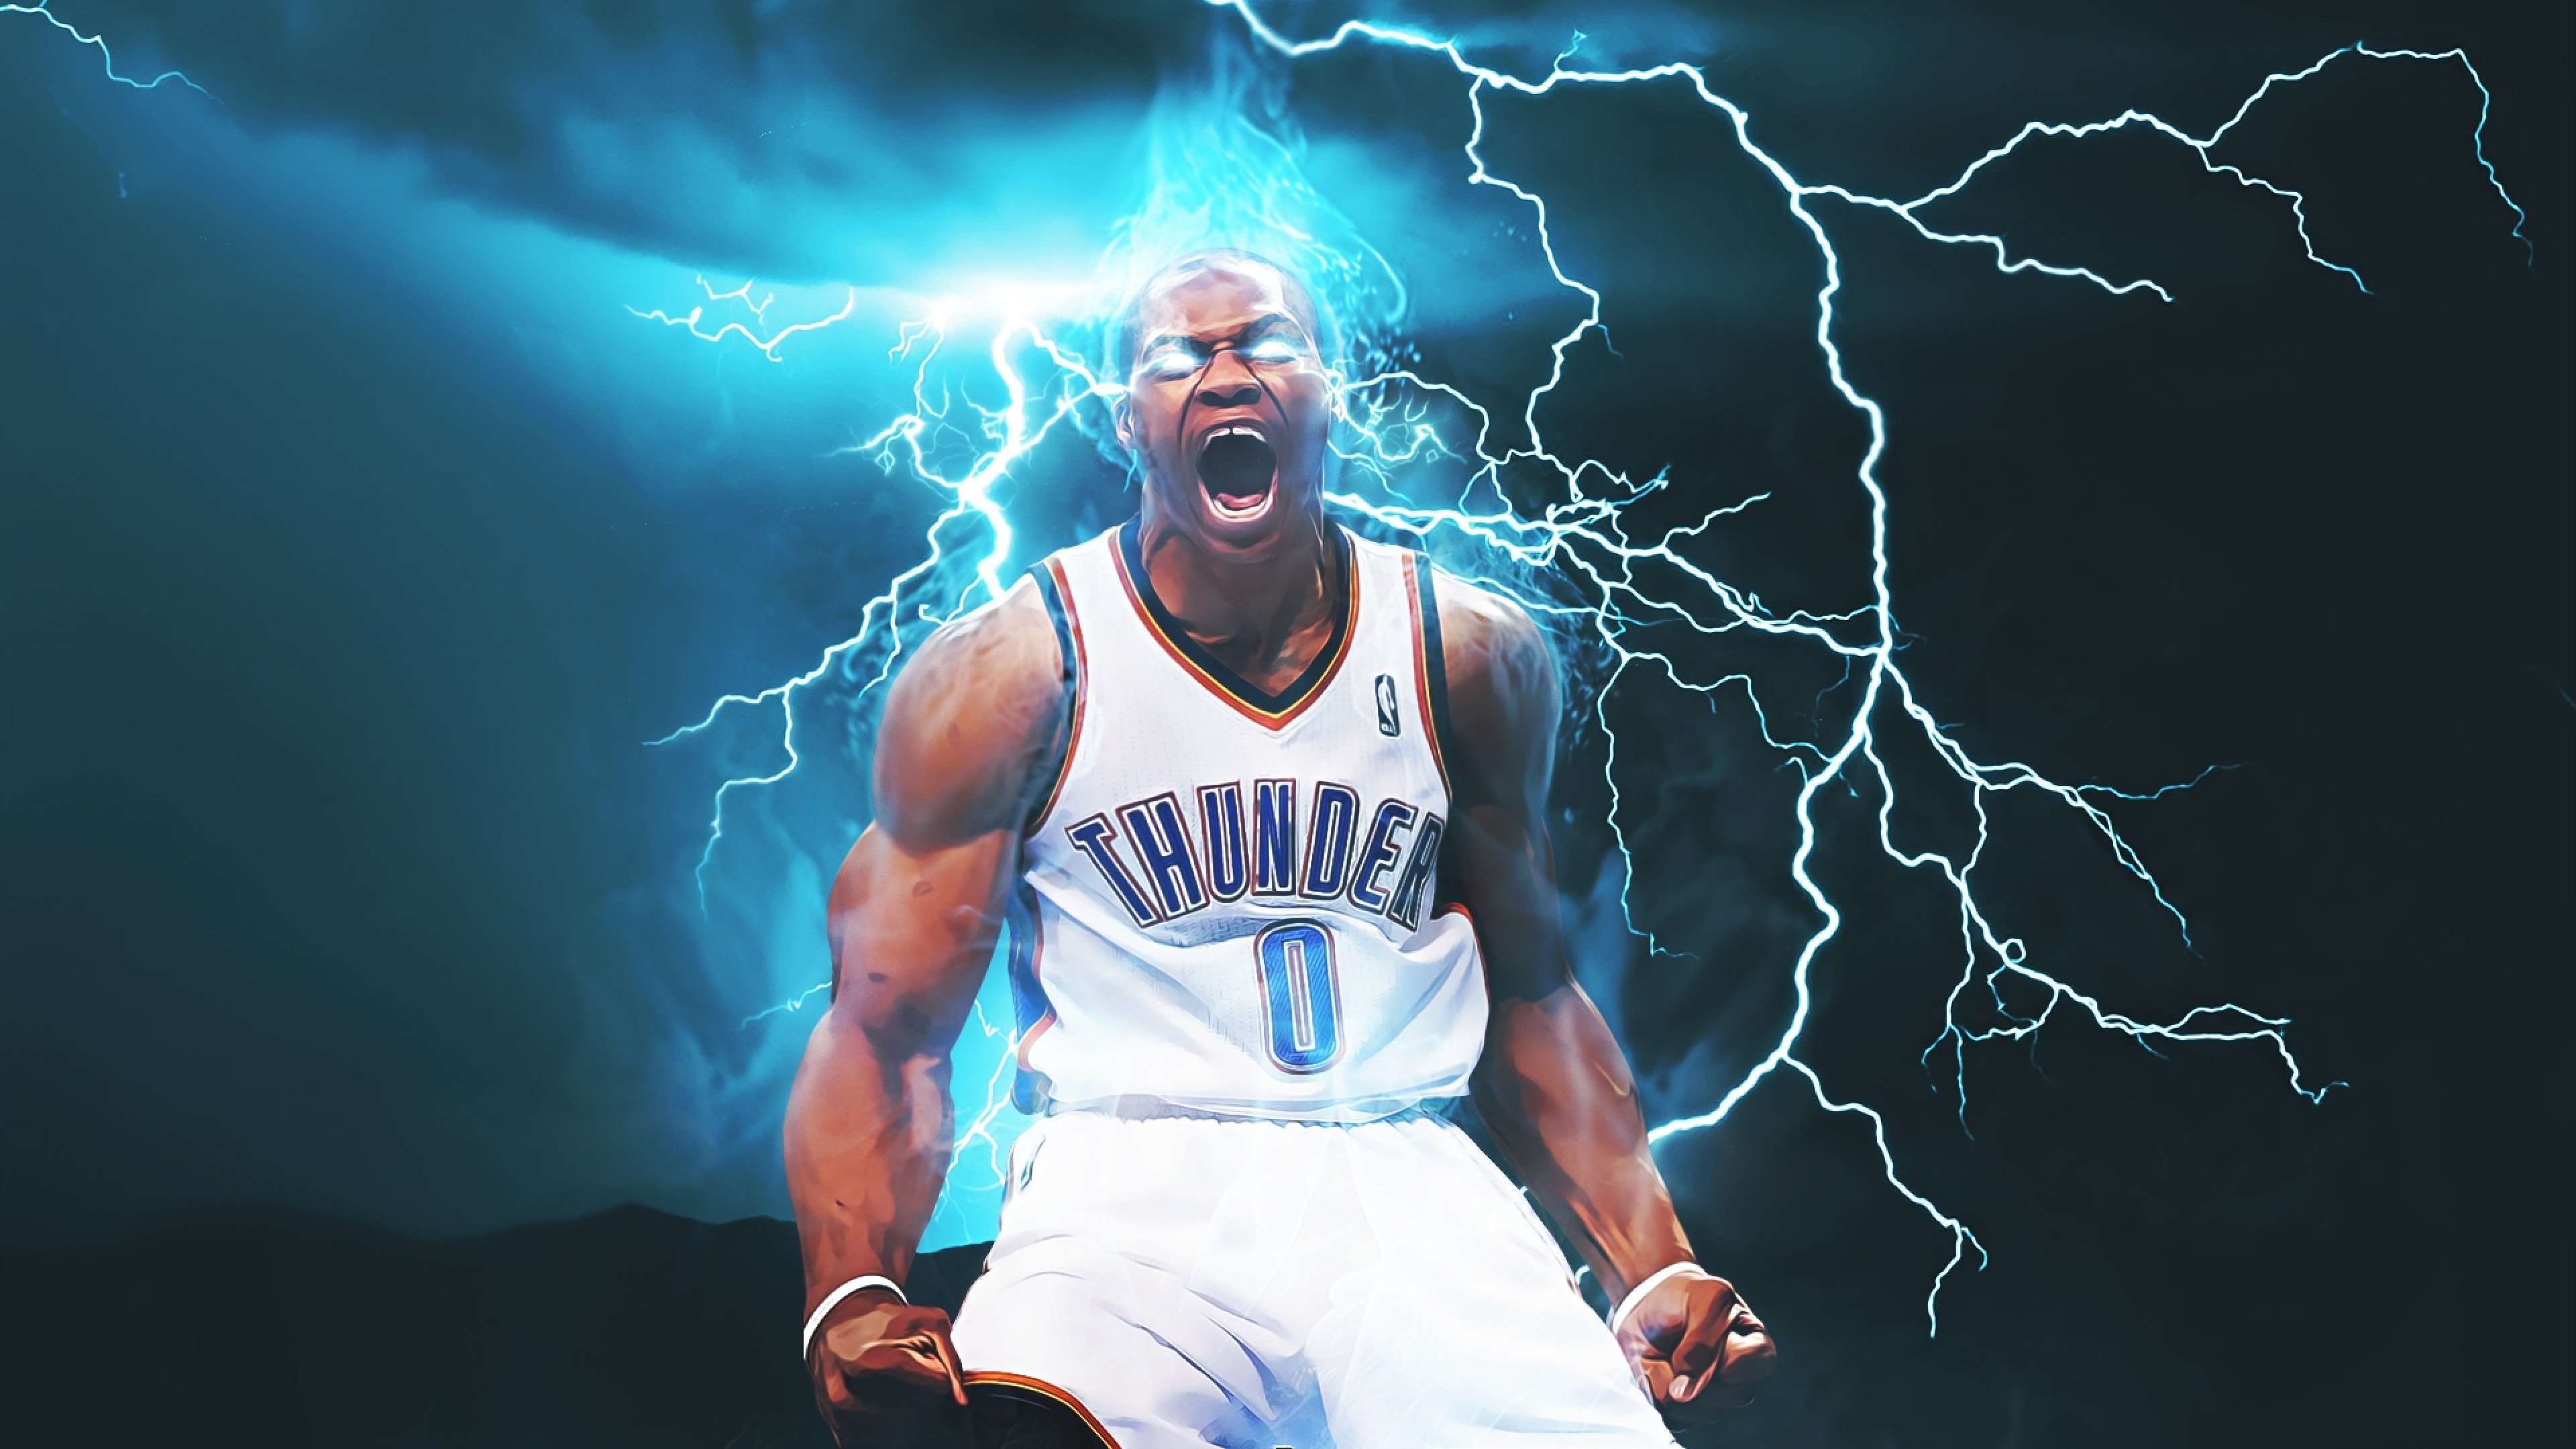 westbrook hd wallpaper,basketball player,lightning,thunder,muscle,human